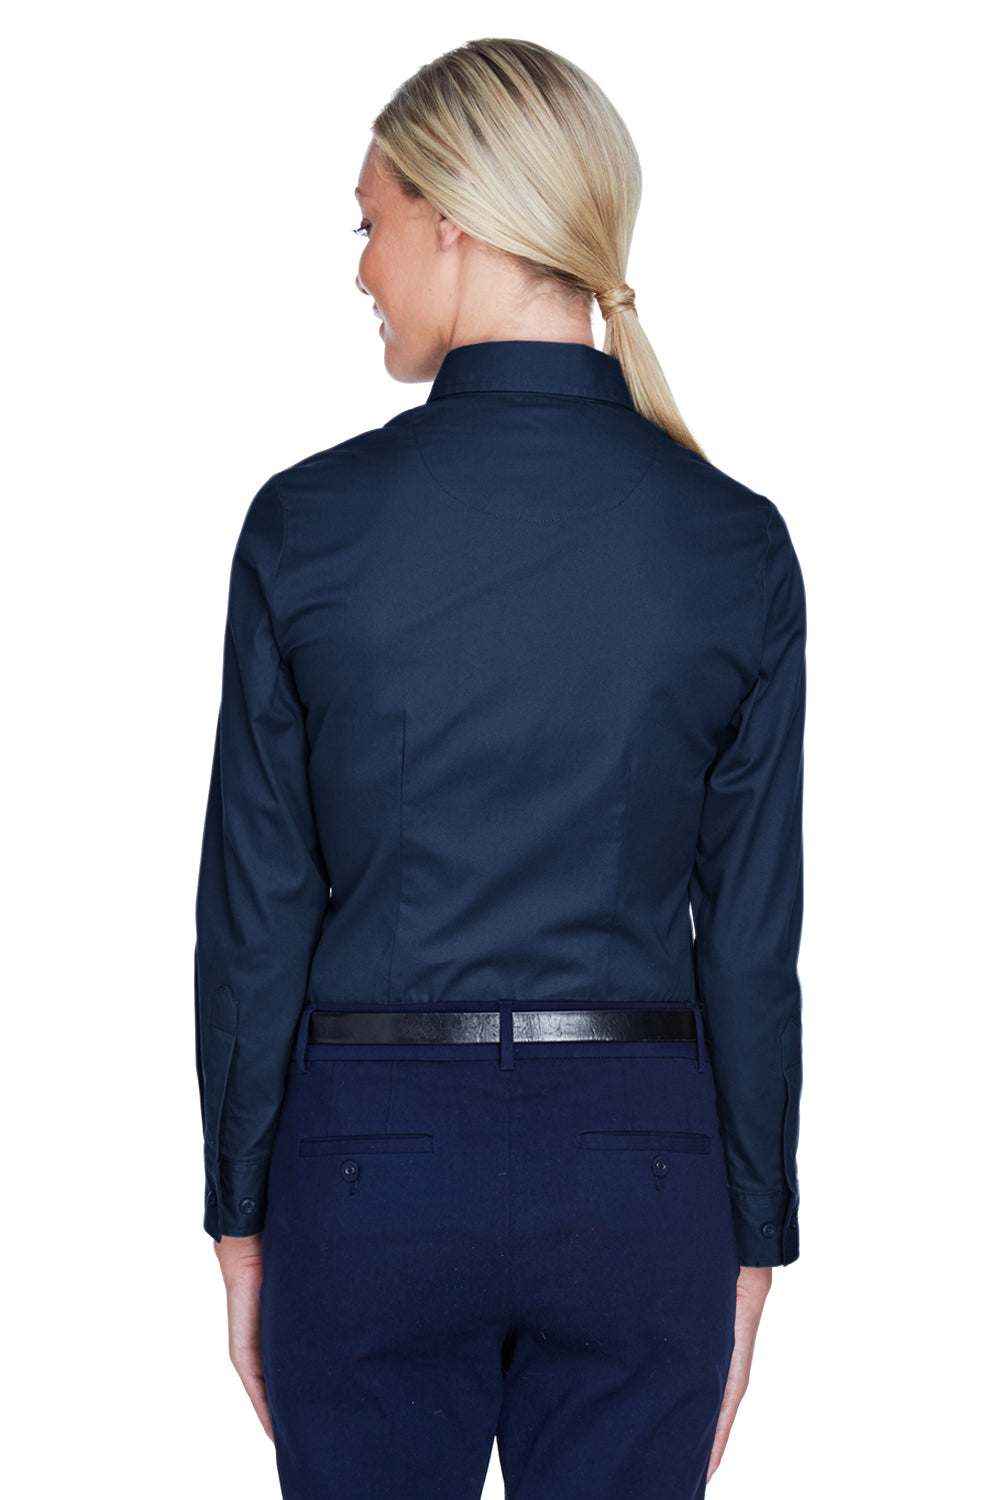 UltraClub 8976 Womens Whisper Long Sleeve Button Down Shirt Navy Blue Back